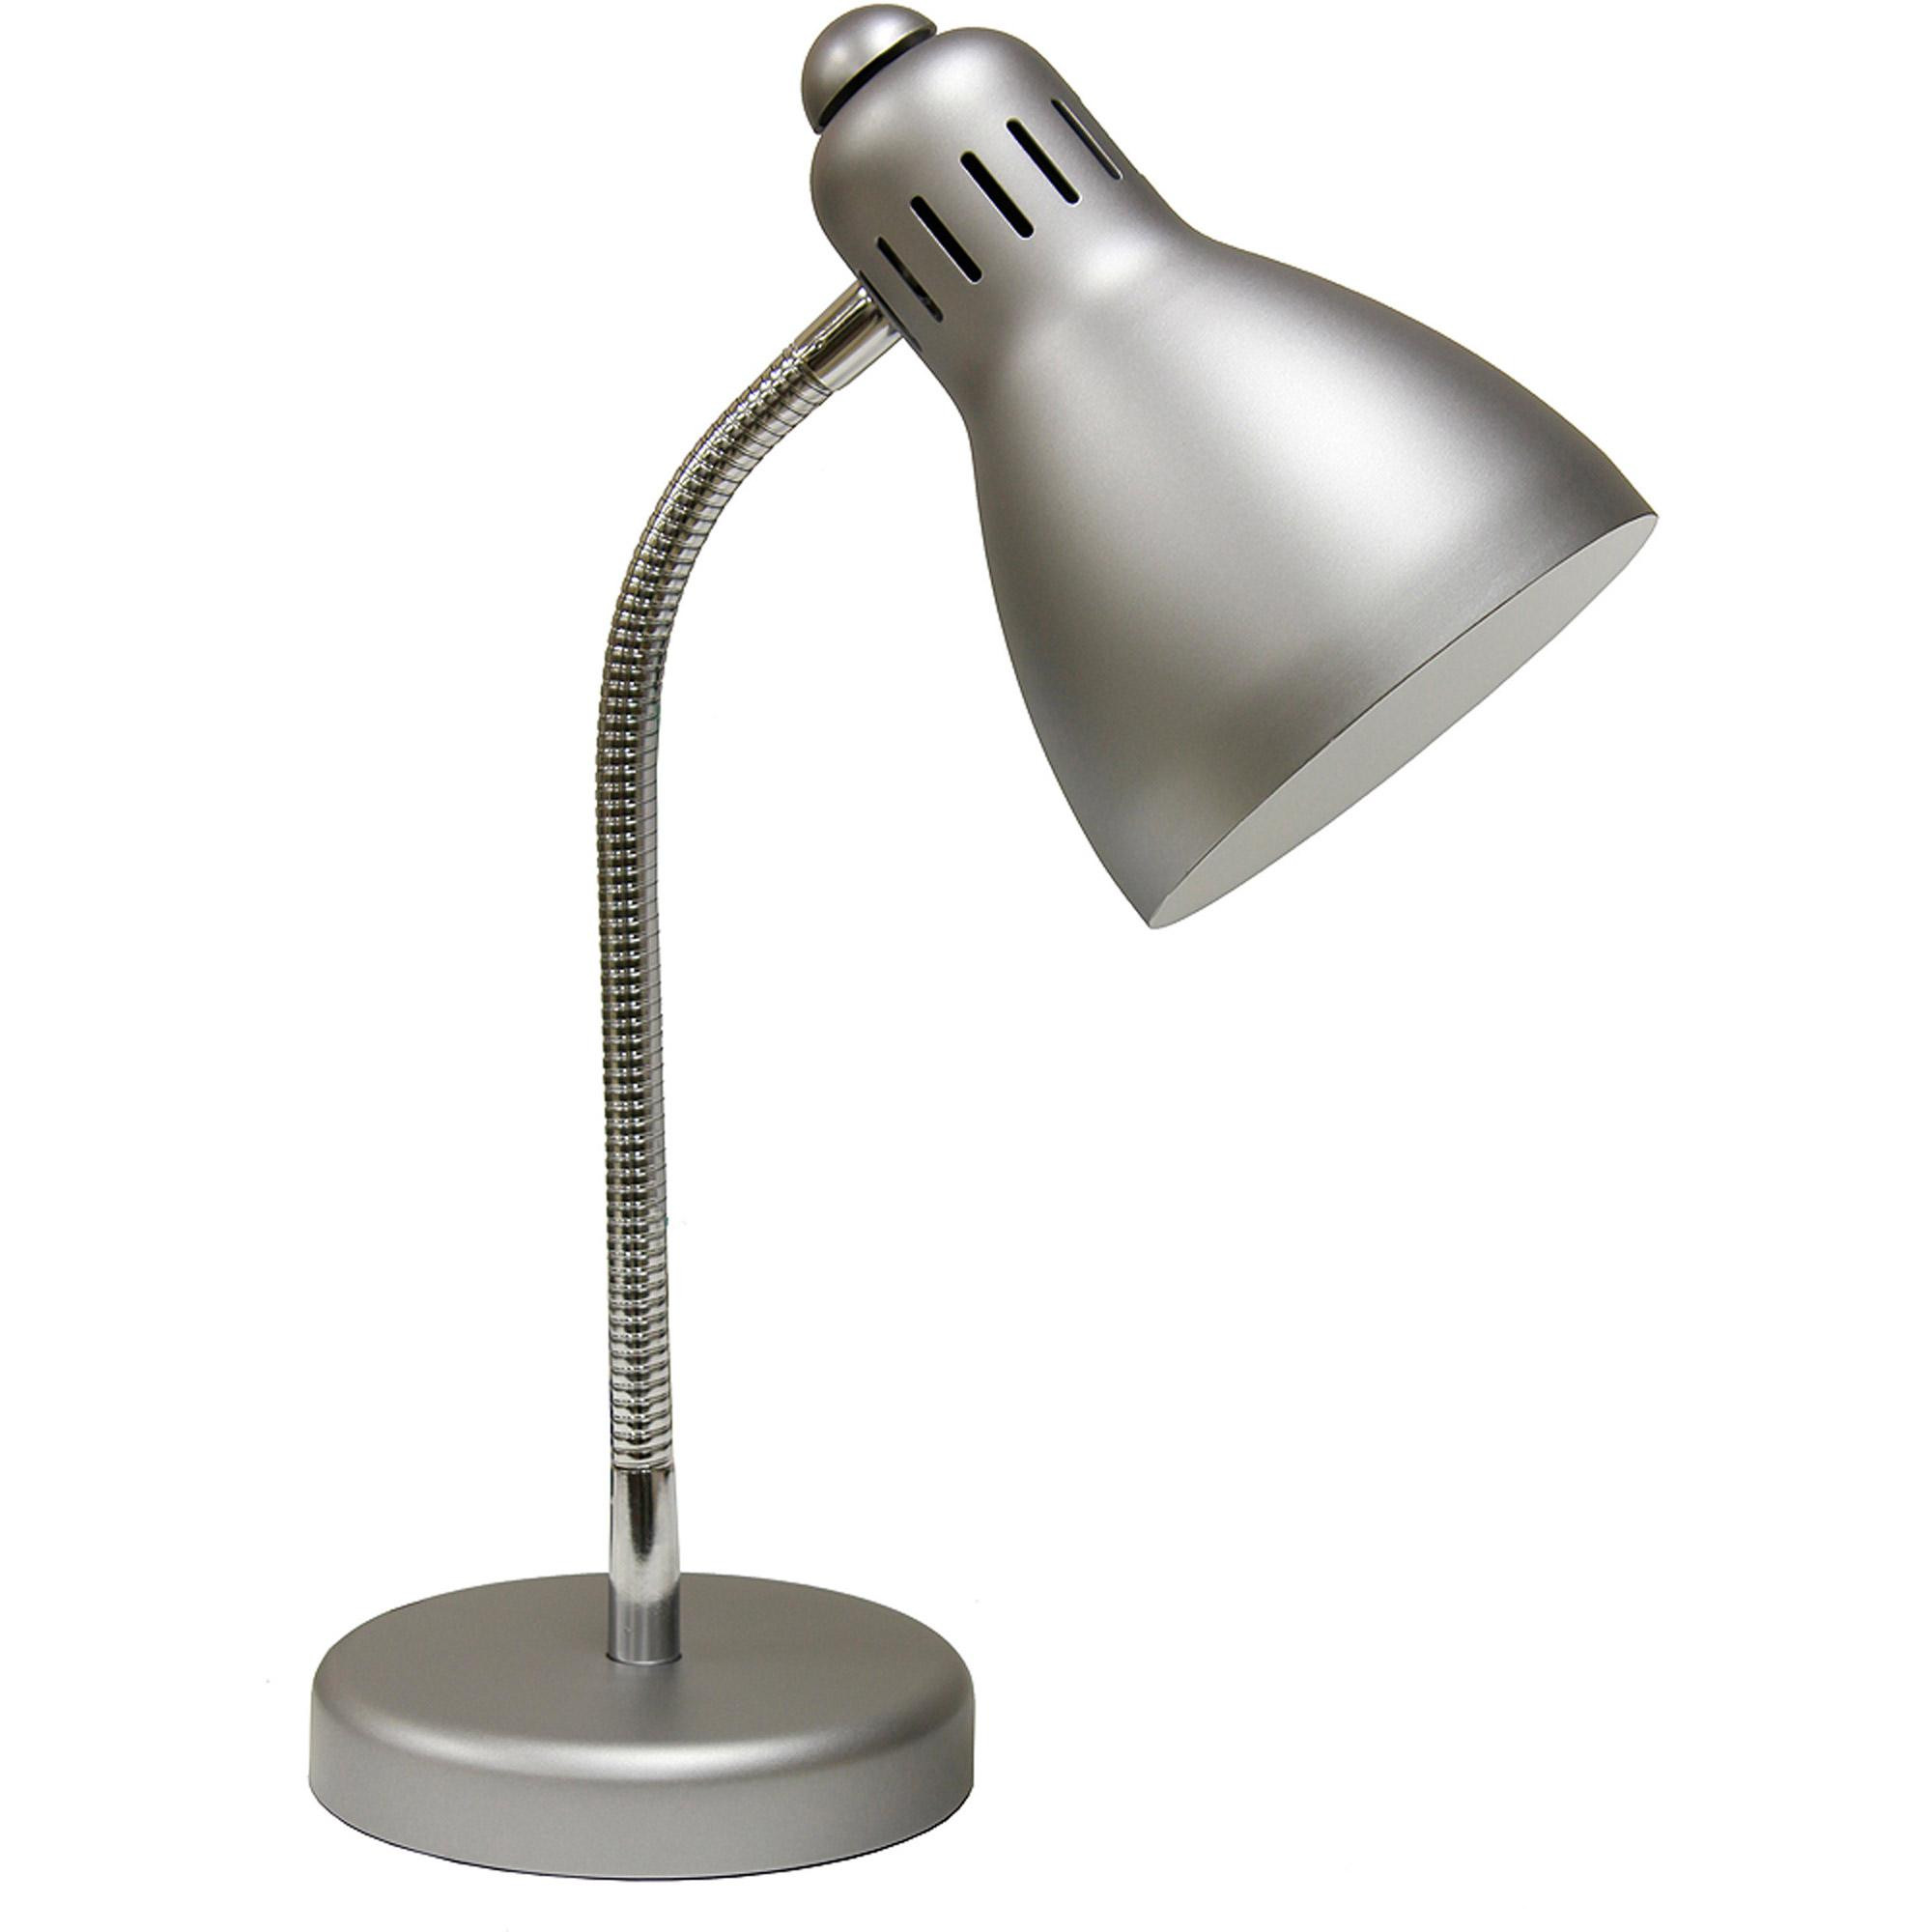 Best ideas about Walmart Desk Lamps
. Save or Pin Desk Lamps Walmart Now.